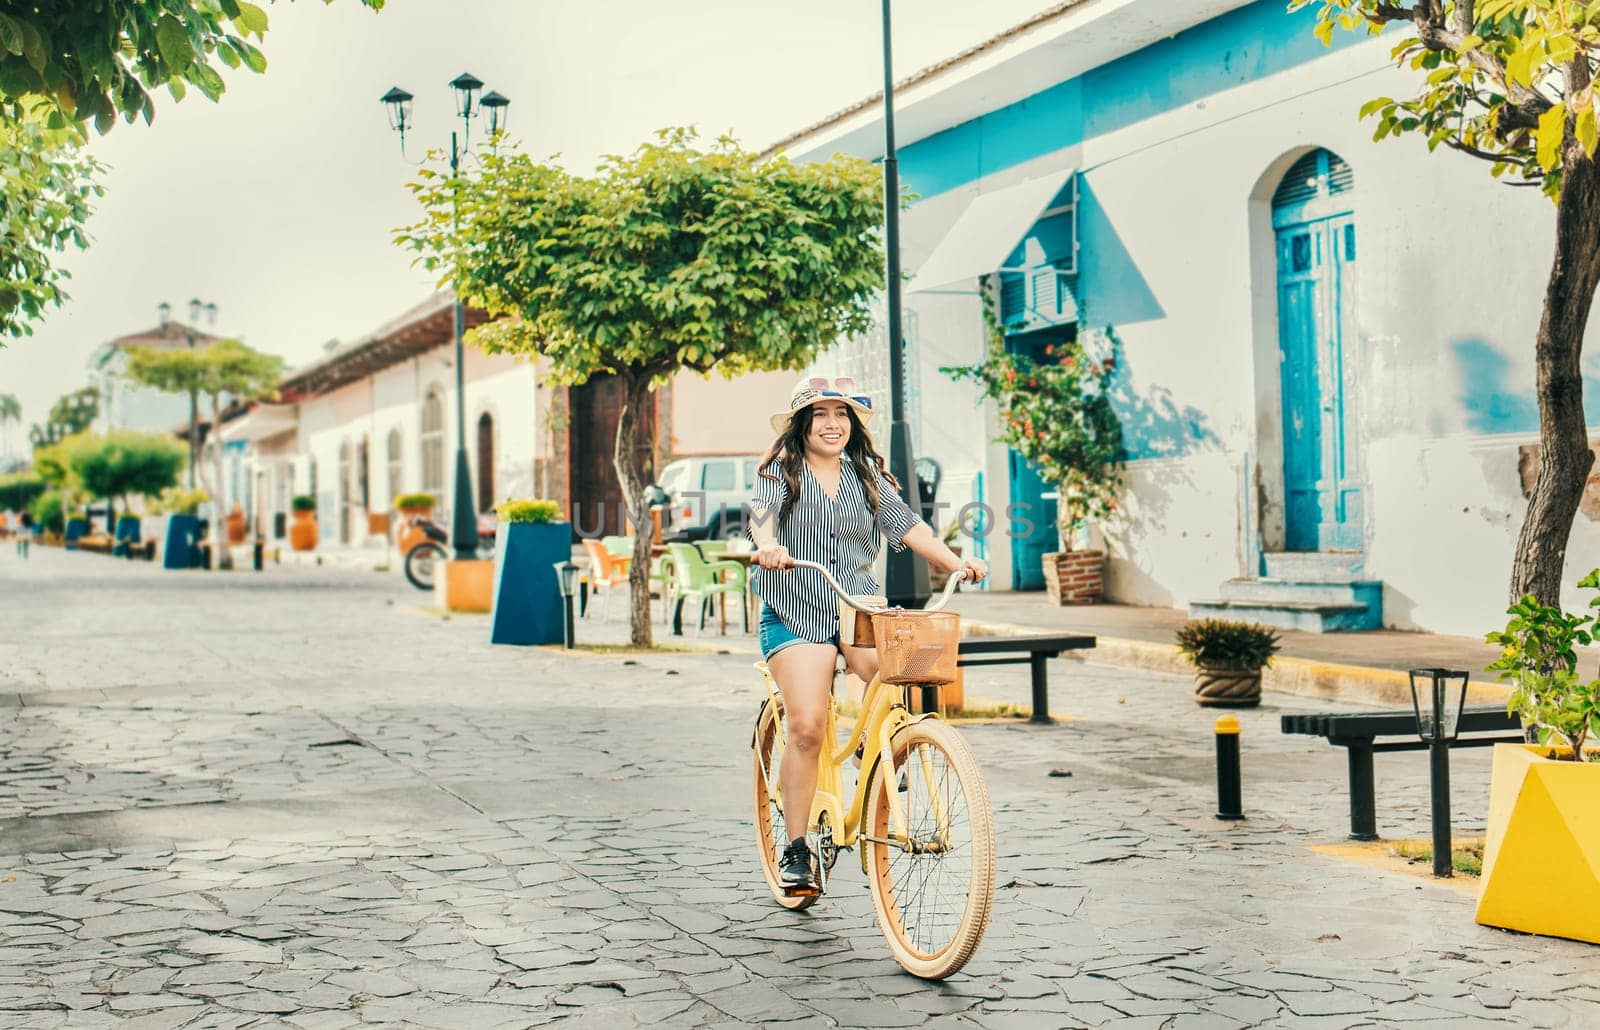 Beautiful and happy girl riding a bicycle on the street of La Calzada, Granada, Nicaragua. Tourist woman riding a bicycle on the streets of Granada